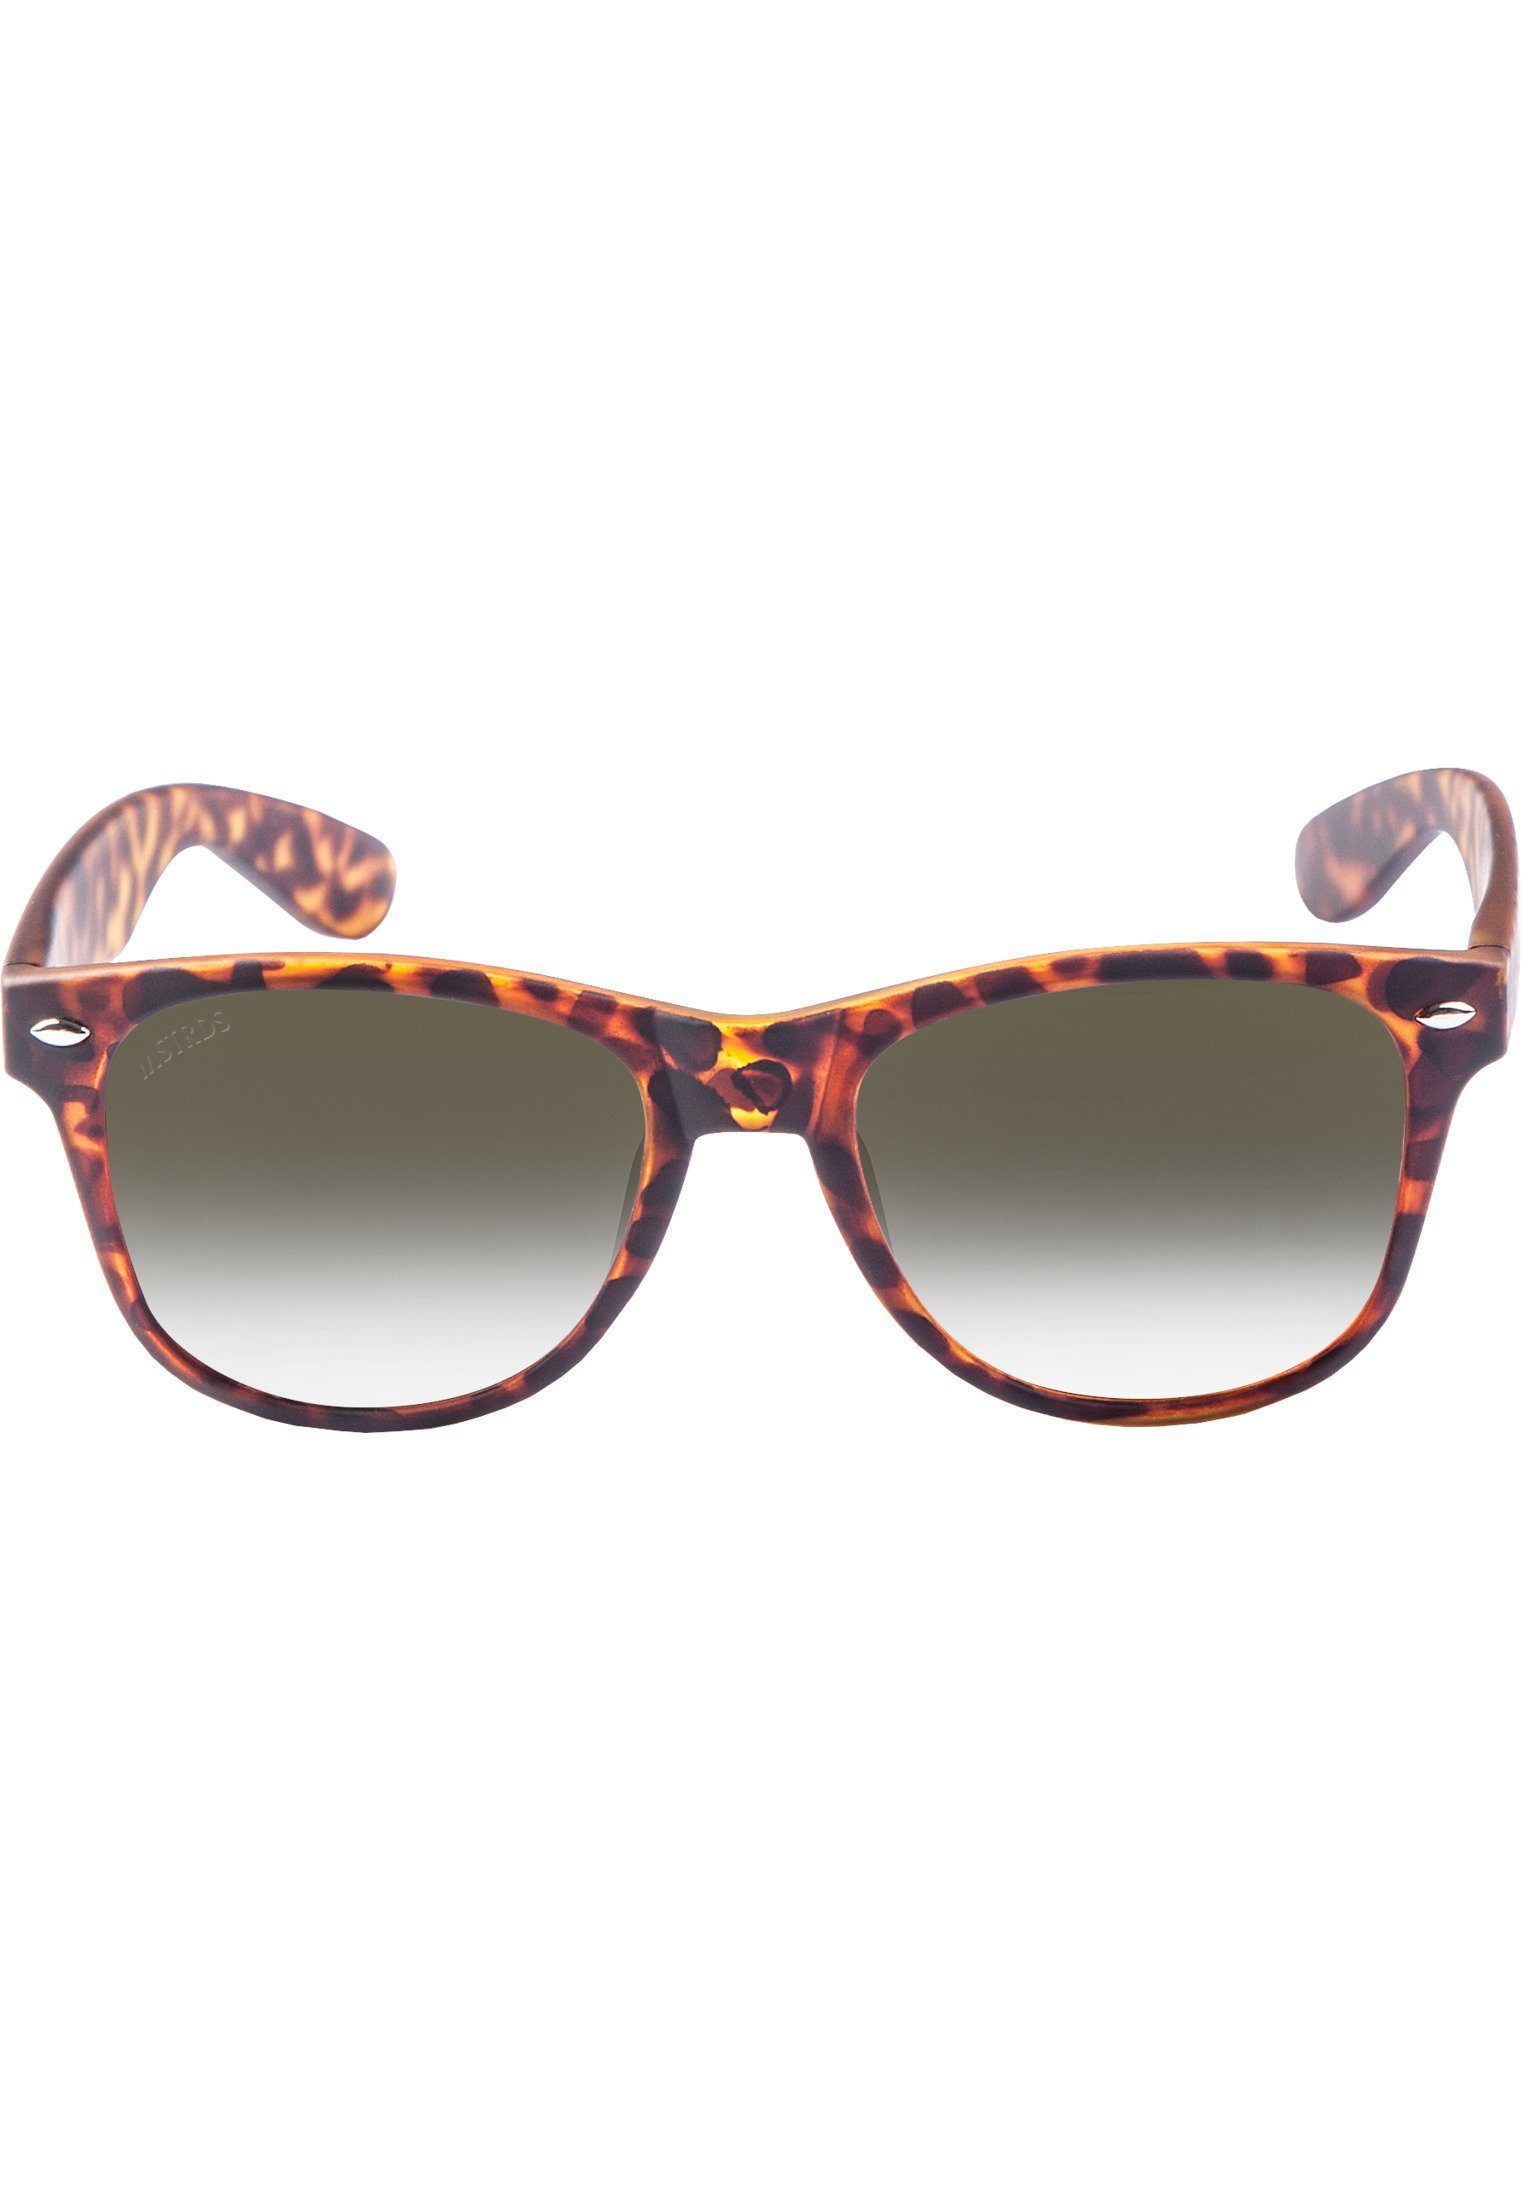 Accessoires Freien Youth, MSTRDS Sunglasses Ideal im Sport auch geeignet Likoma Sonnenbrille für